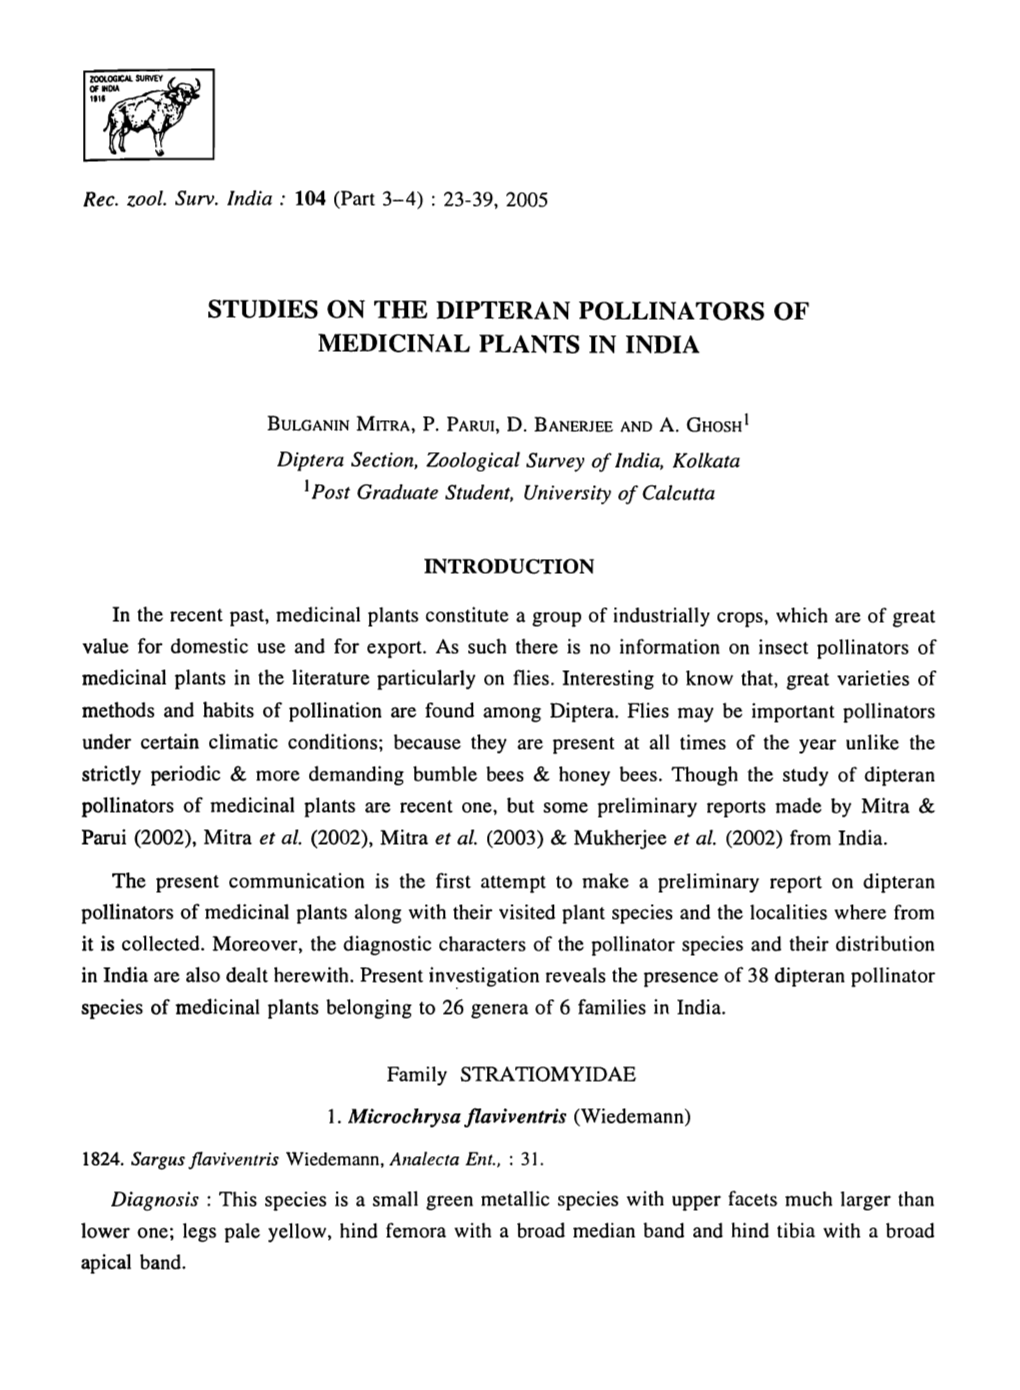 Studies on the Dipteran Pollinators of Medicinal Plants in India